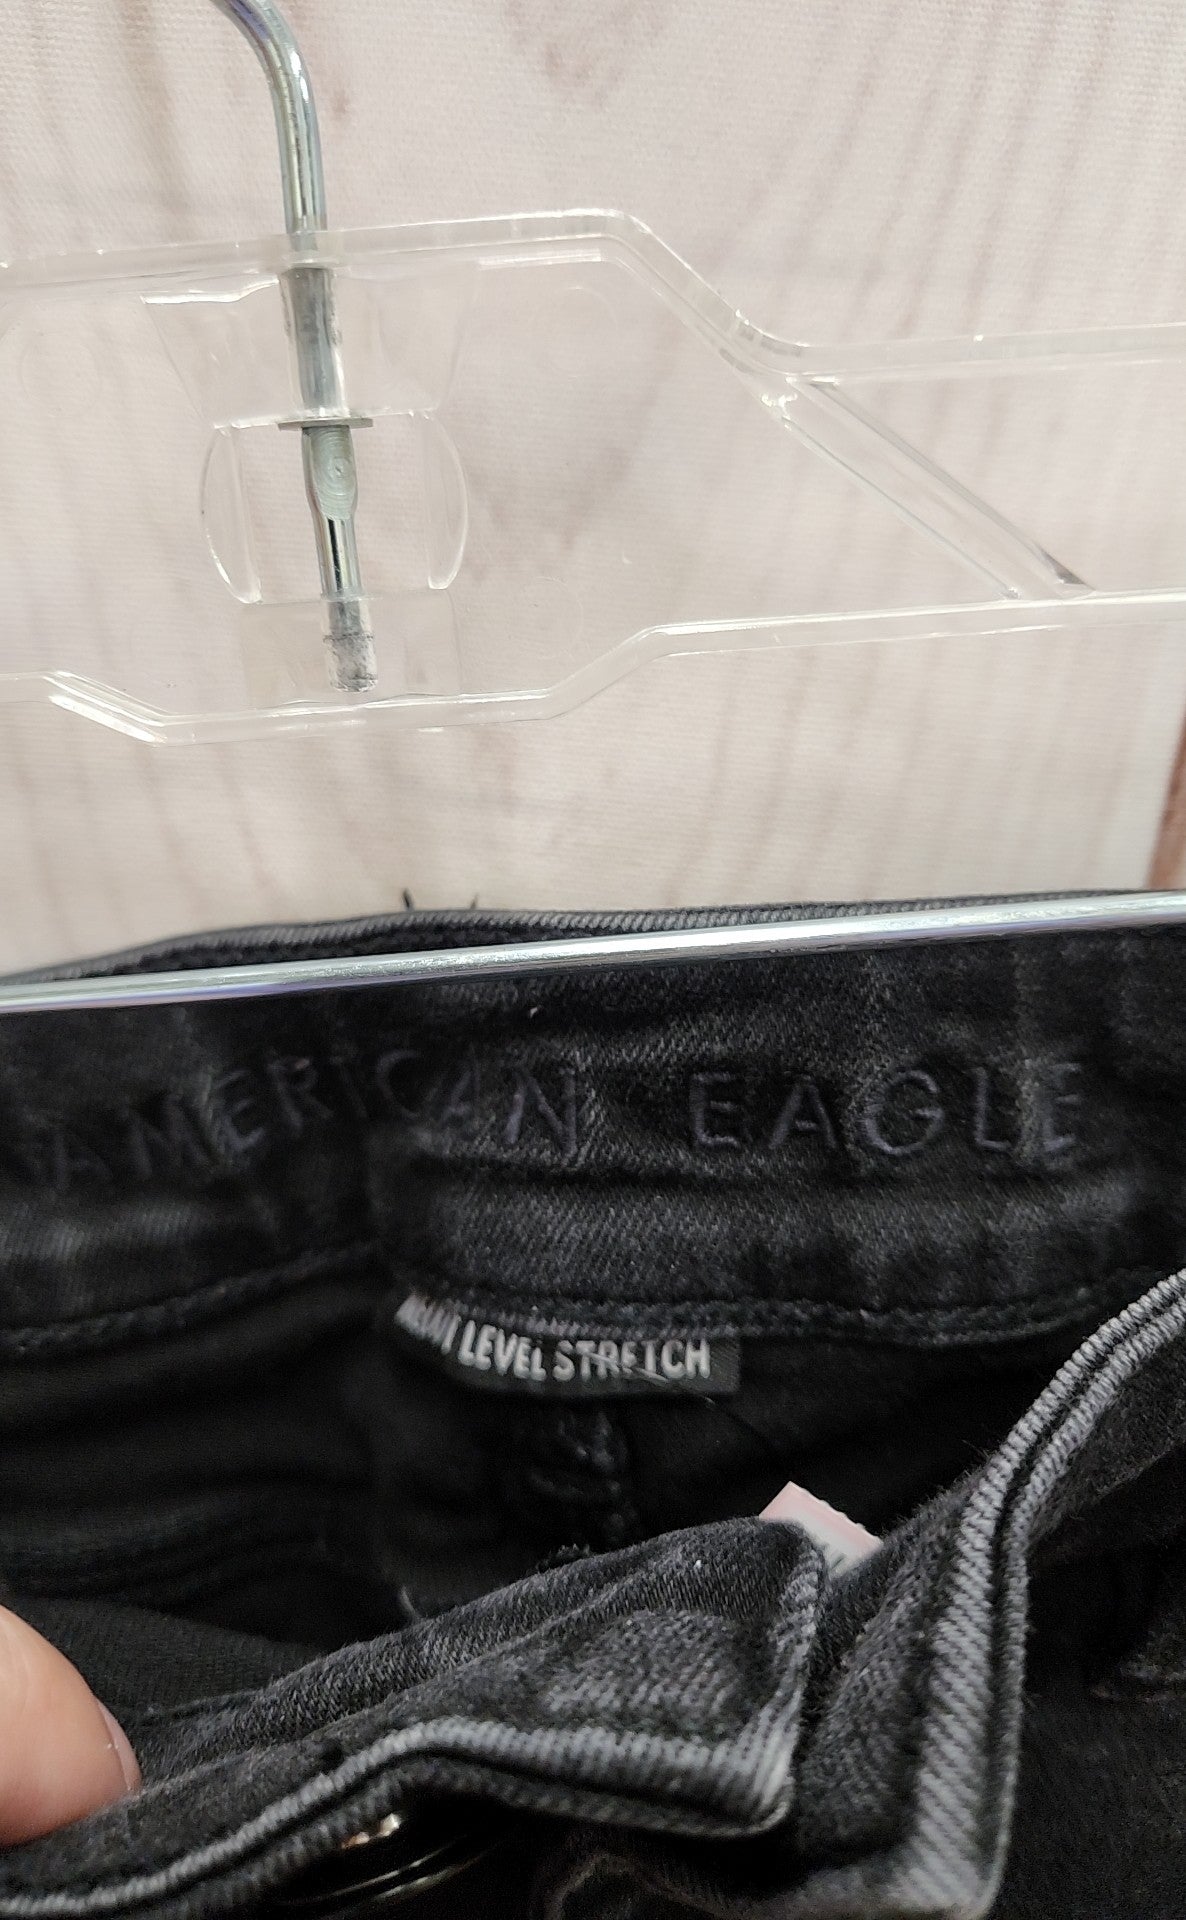 American Eagle Women's Size 29 (7-8) Black Jeans